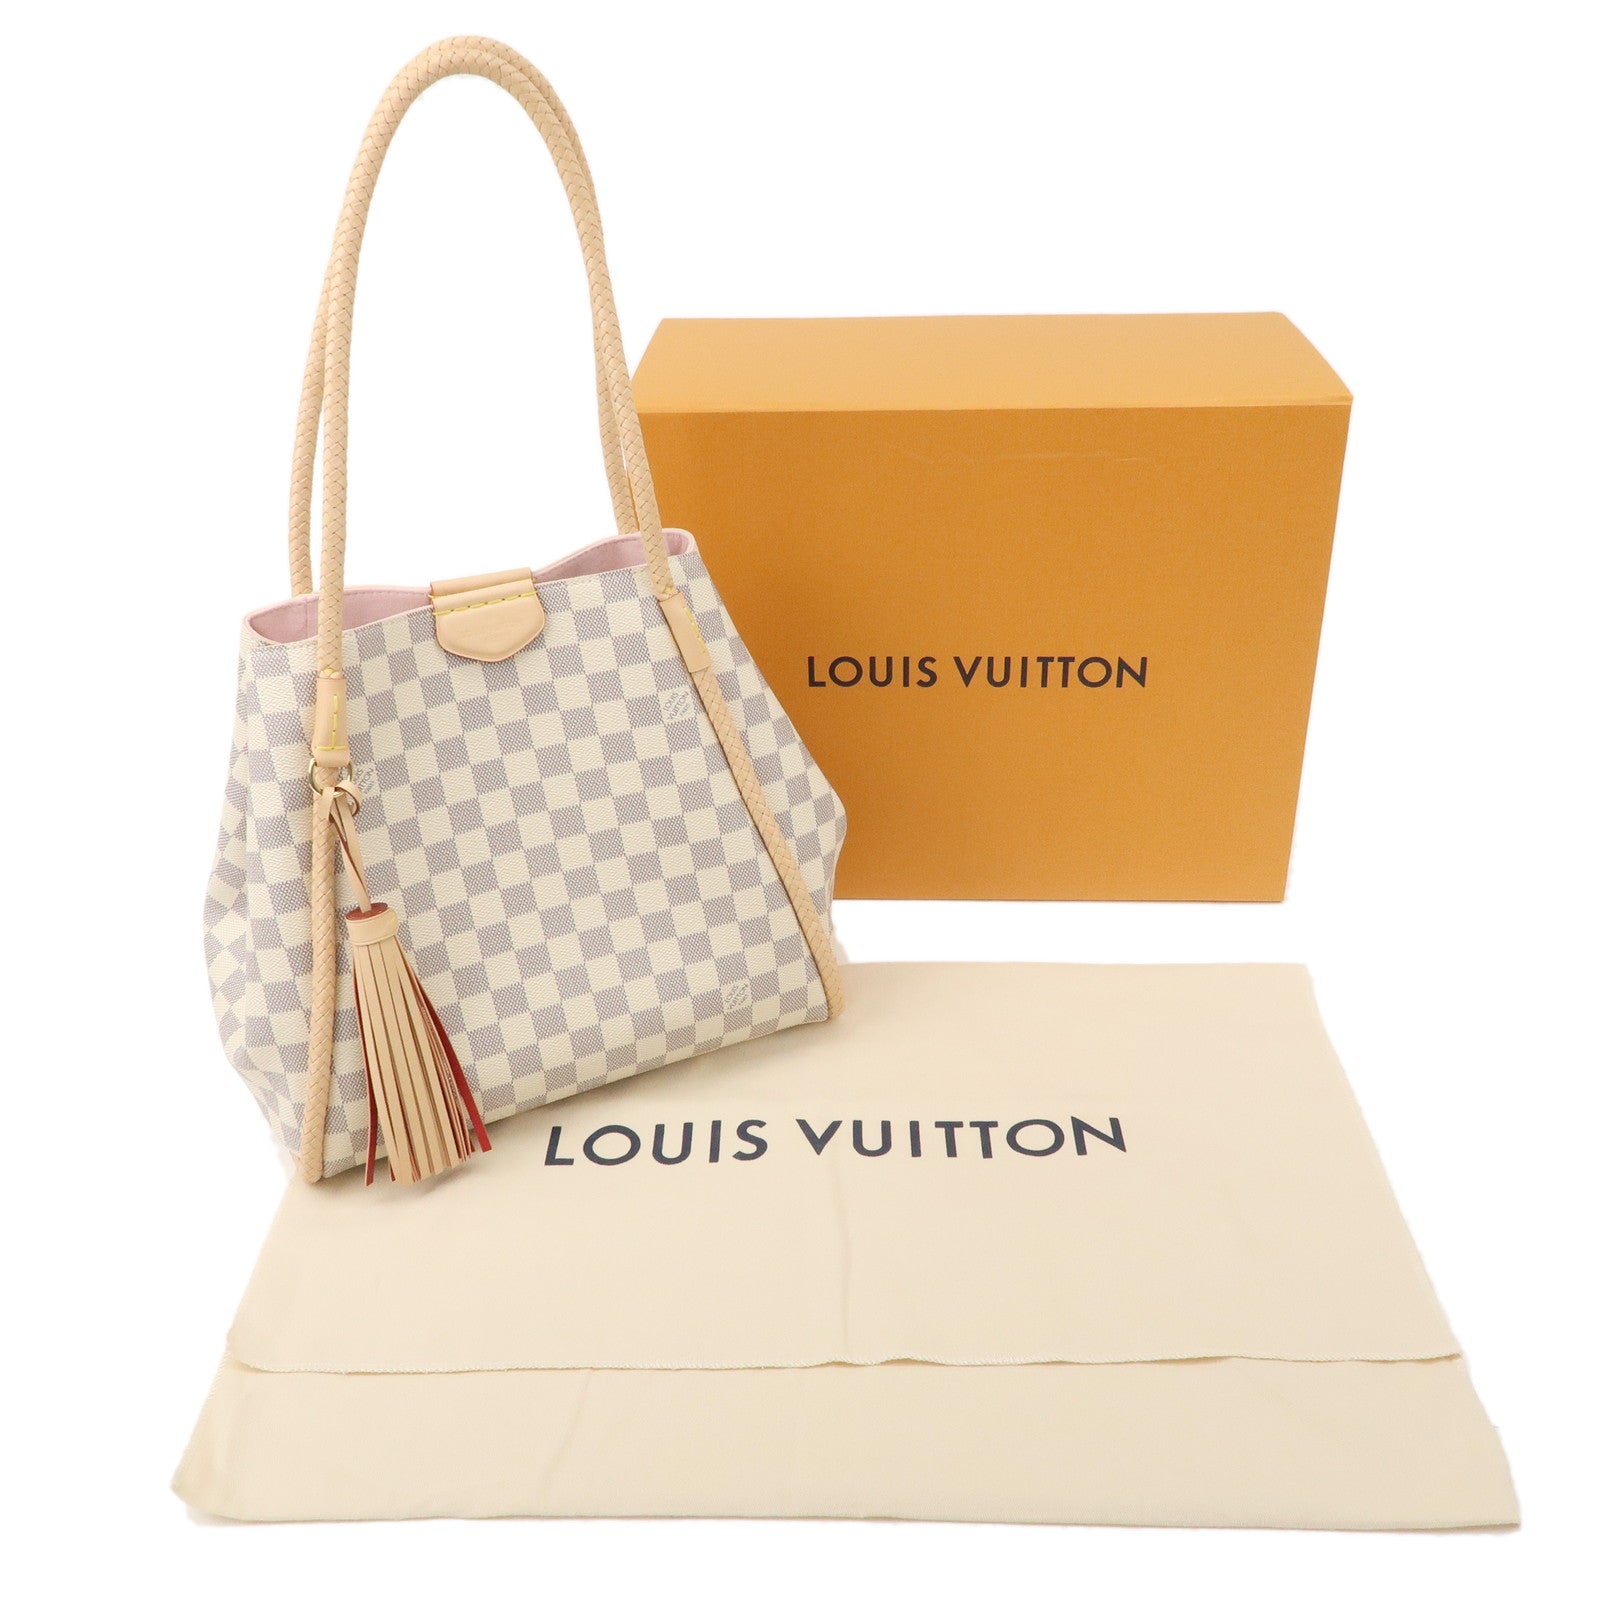 Review Louis Vuitton PROPRIANO TOTE BAG DAMIER AZUR 